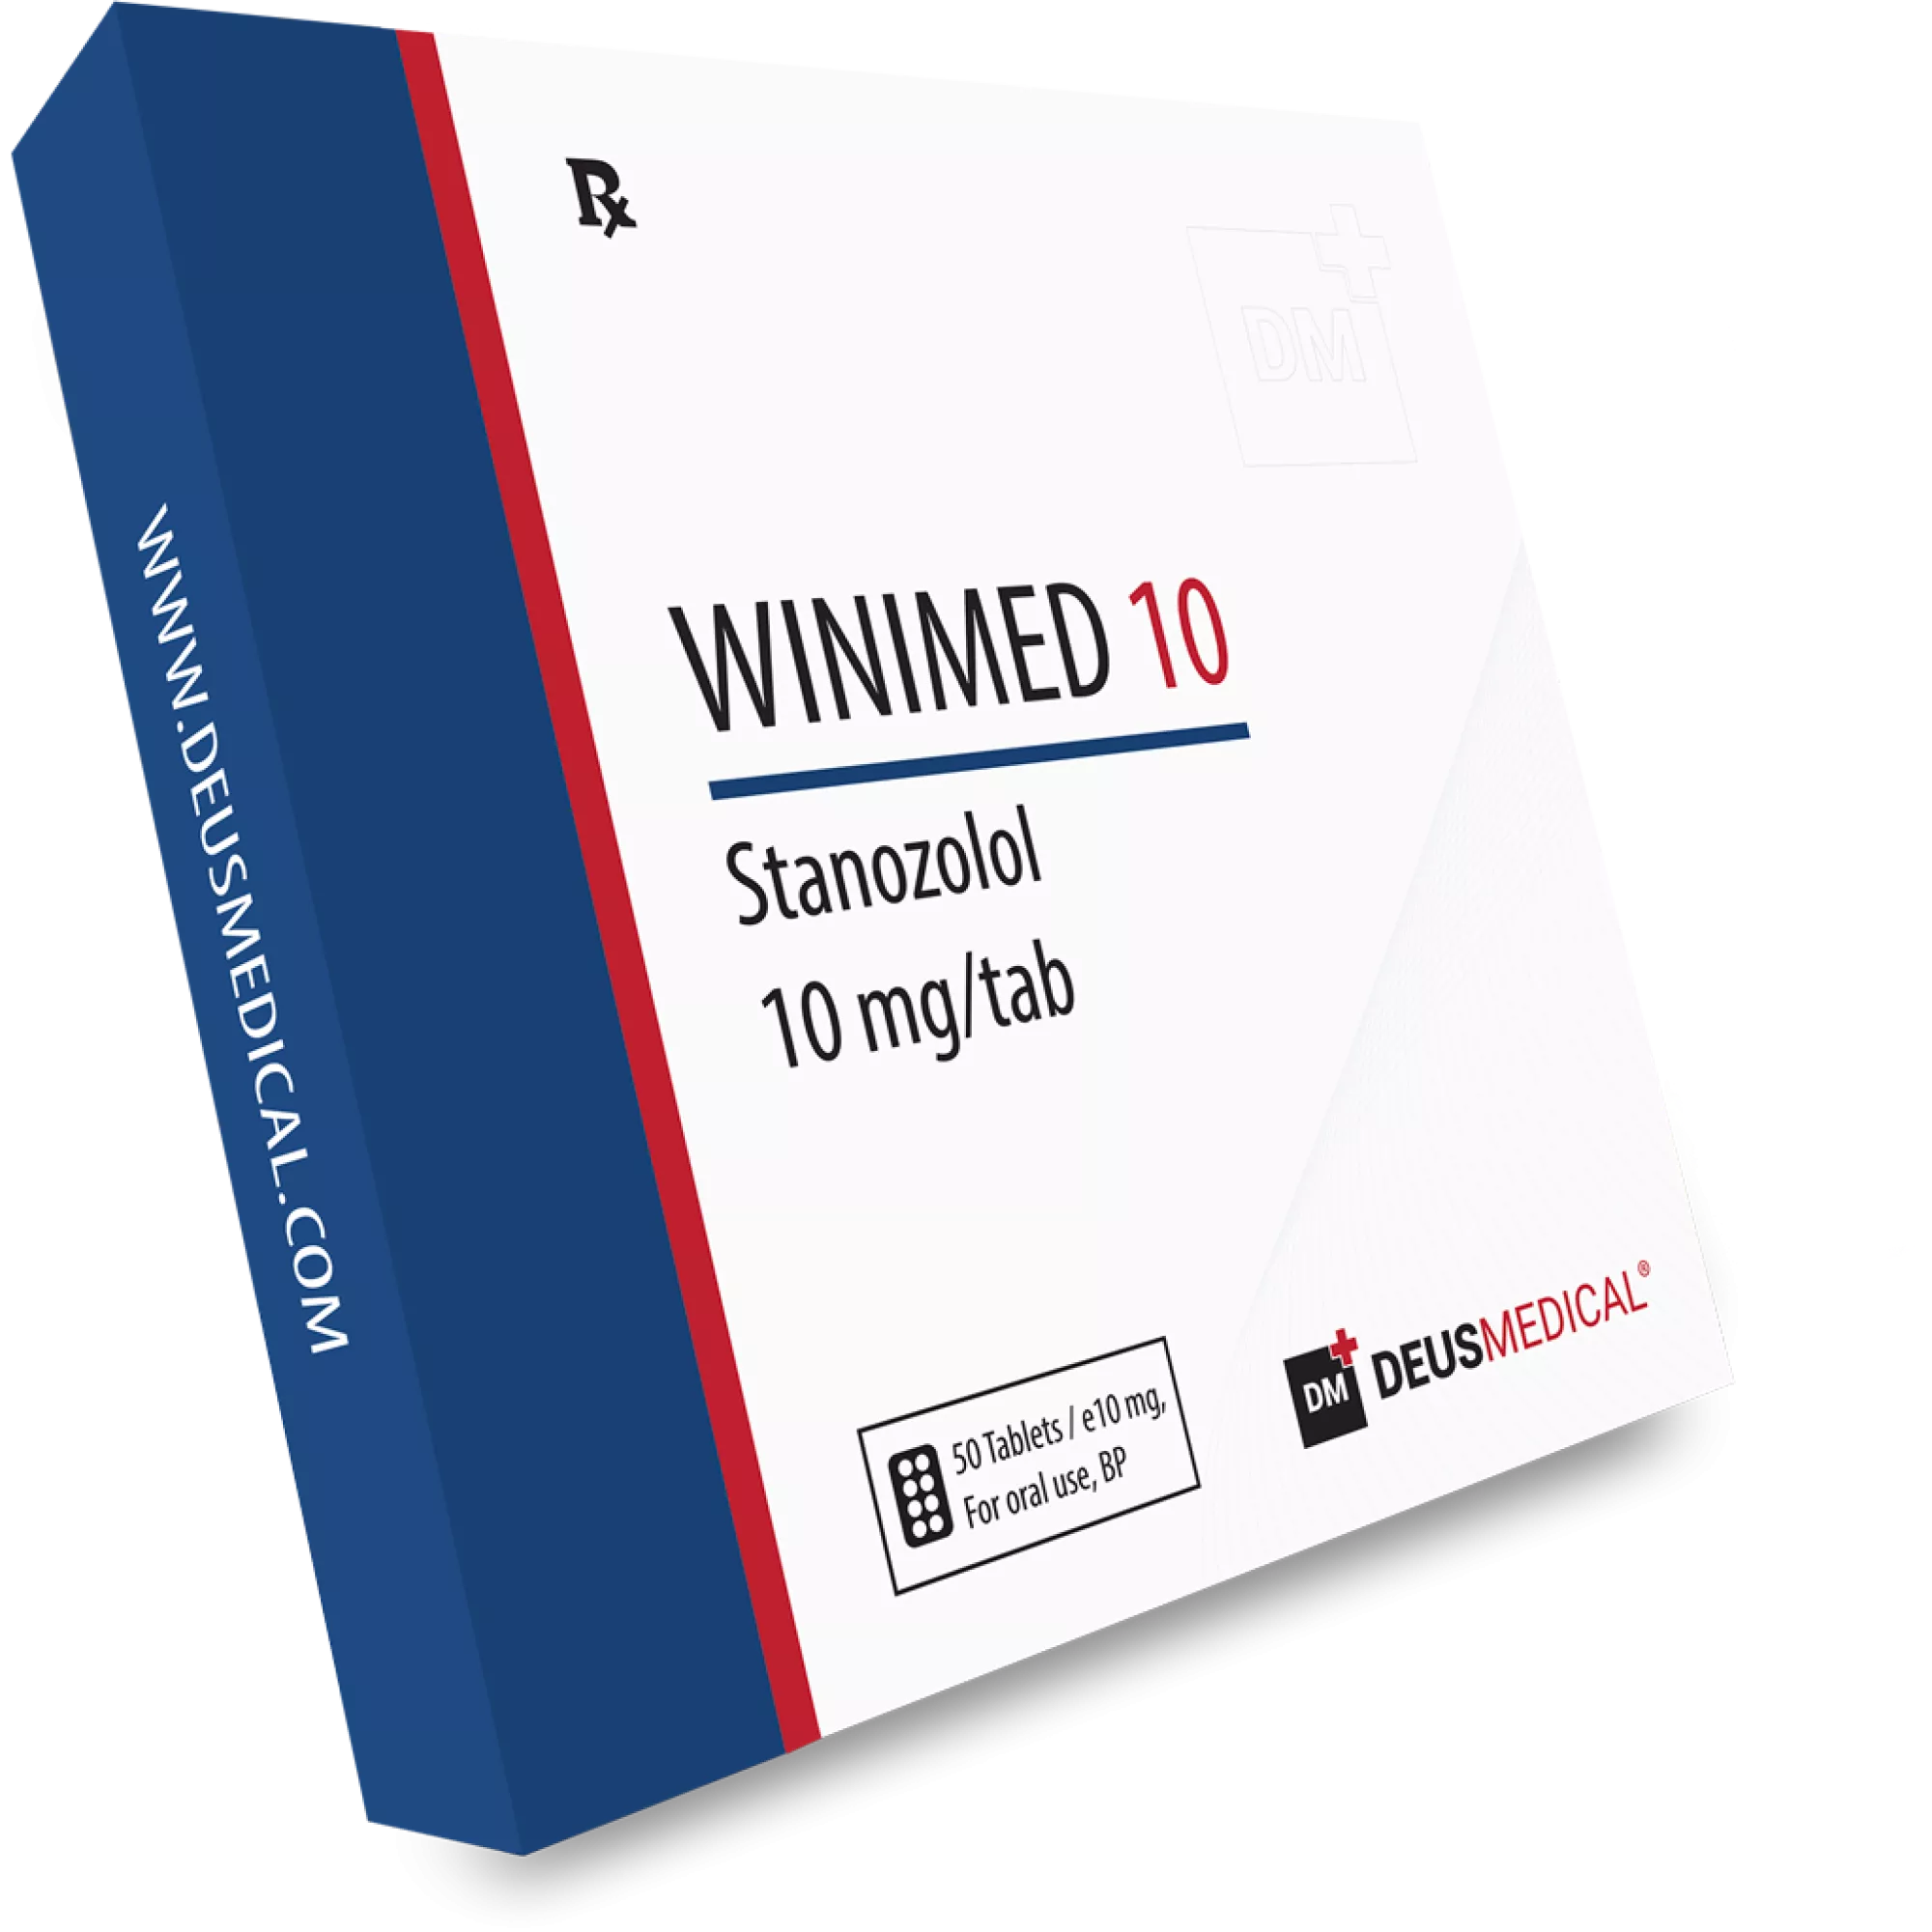 WINIMED 10 (Stanozolol), Deus Medical, Buy Steroids Online - www.deuspower.shop